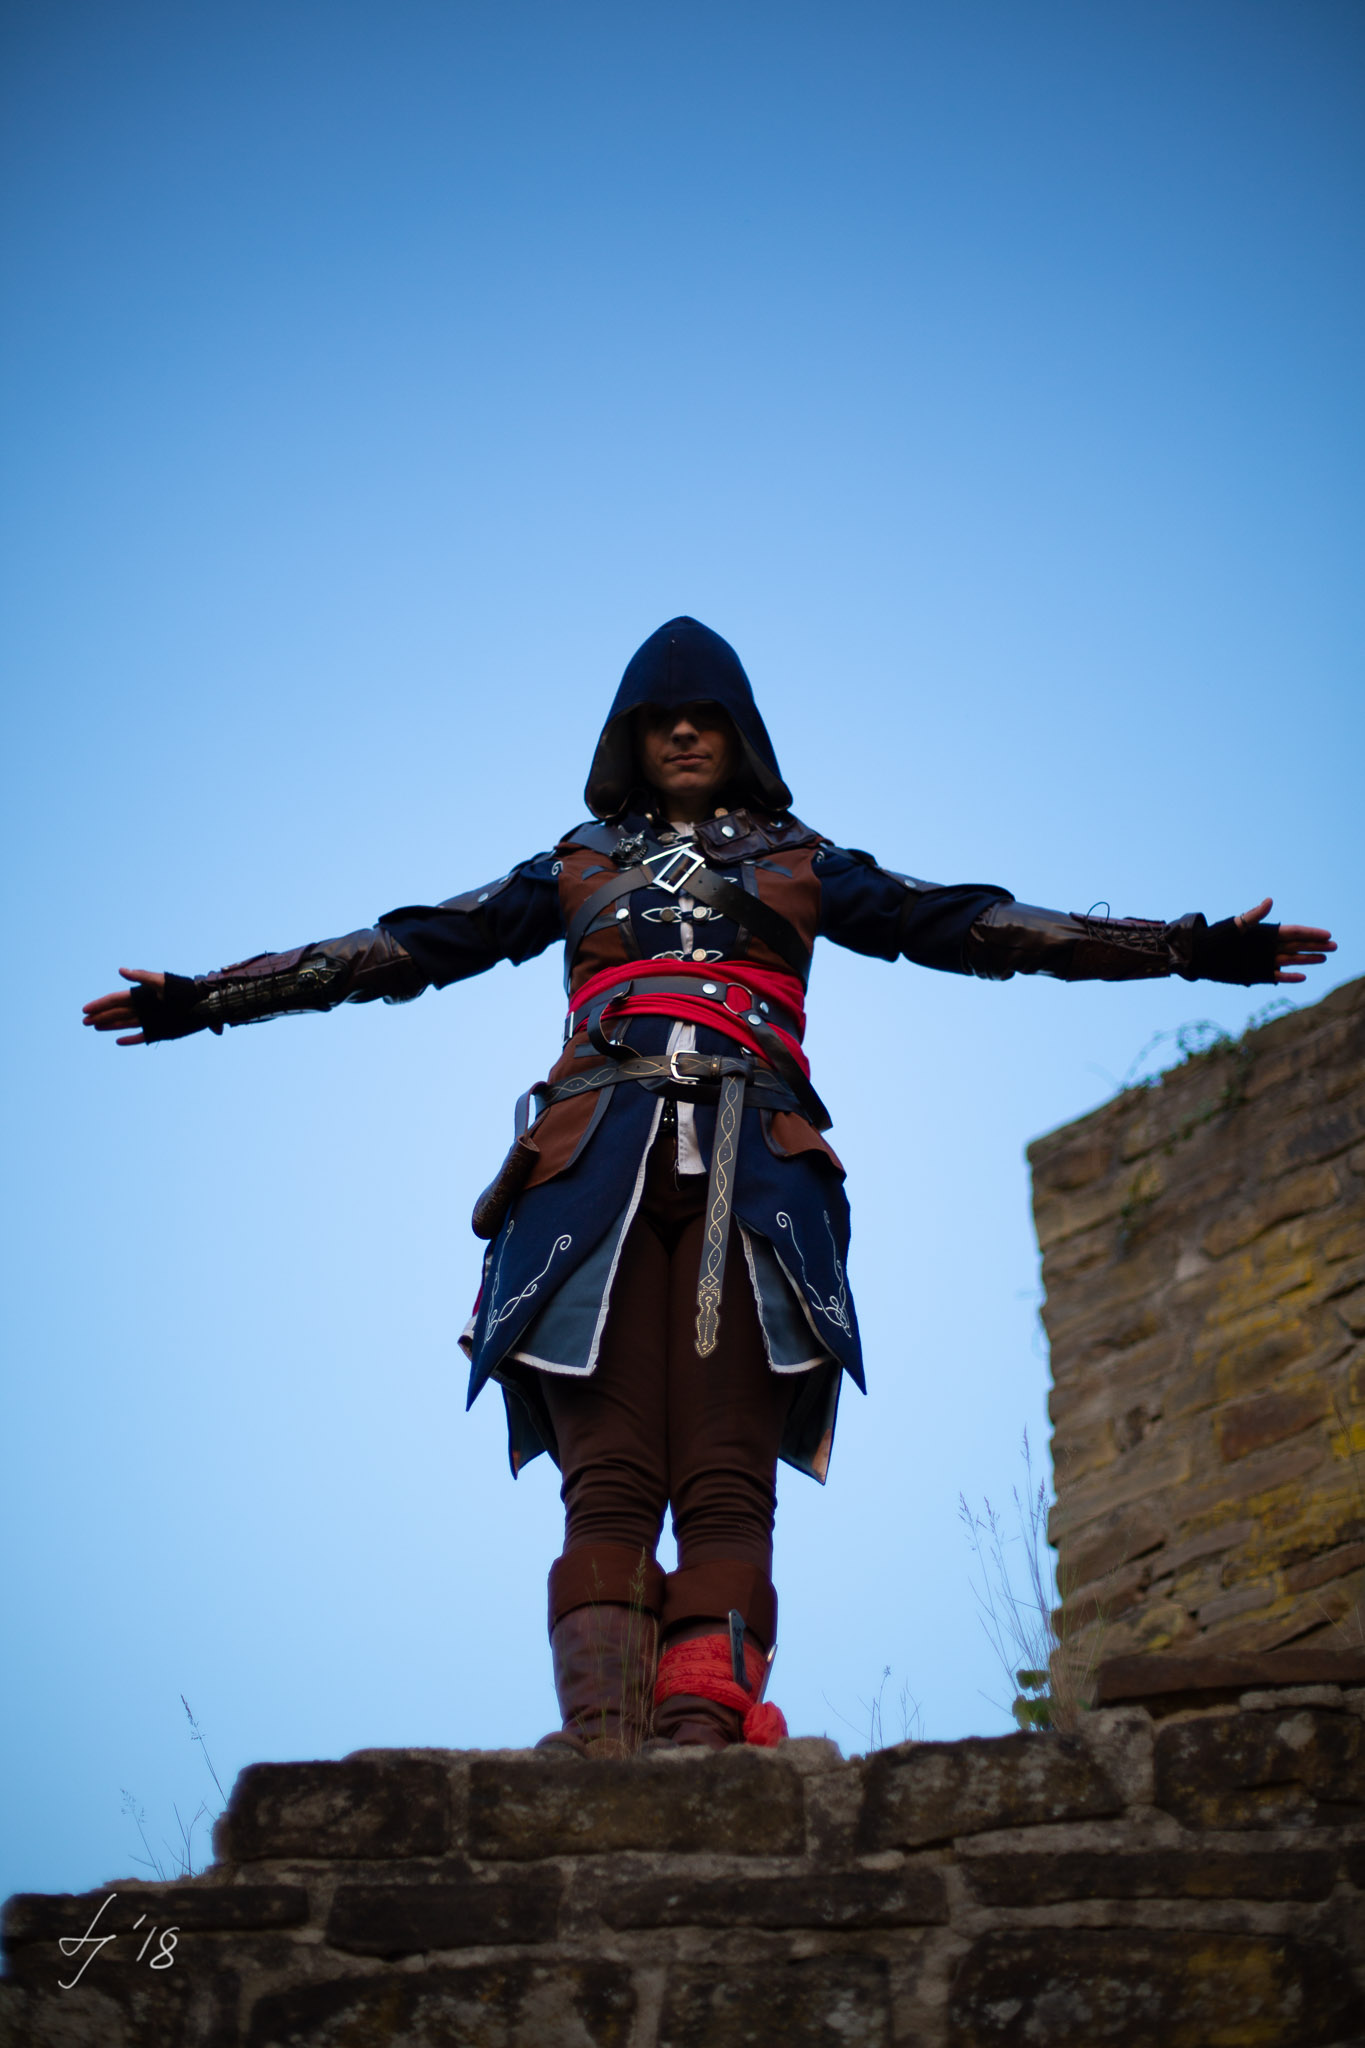 Charakter Portrait beim Assassins Creed Foto Shooting in Blankenberg. Model: Anna | Charakter: Edward Kenway | Bild: LS Photographie - Sebastian Lehmann